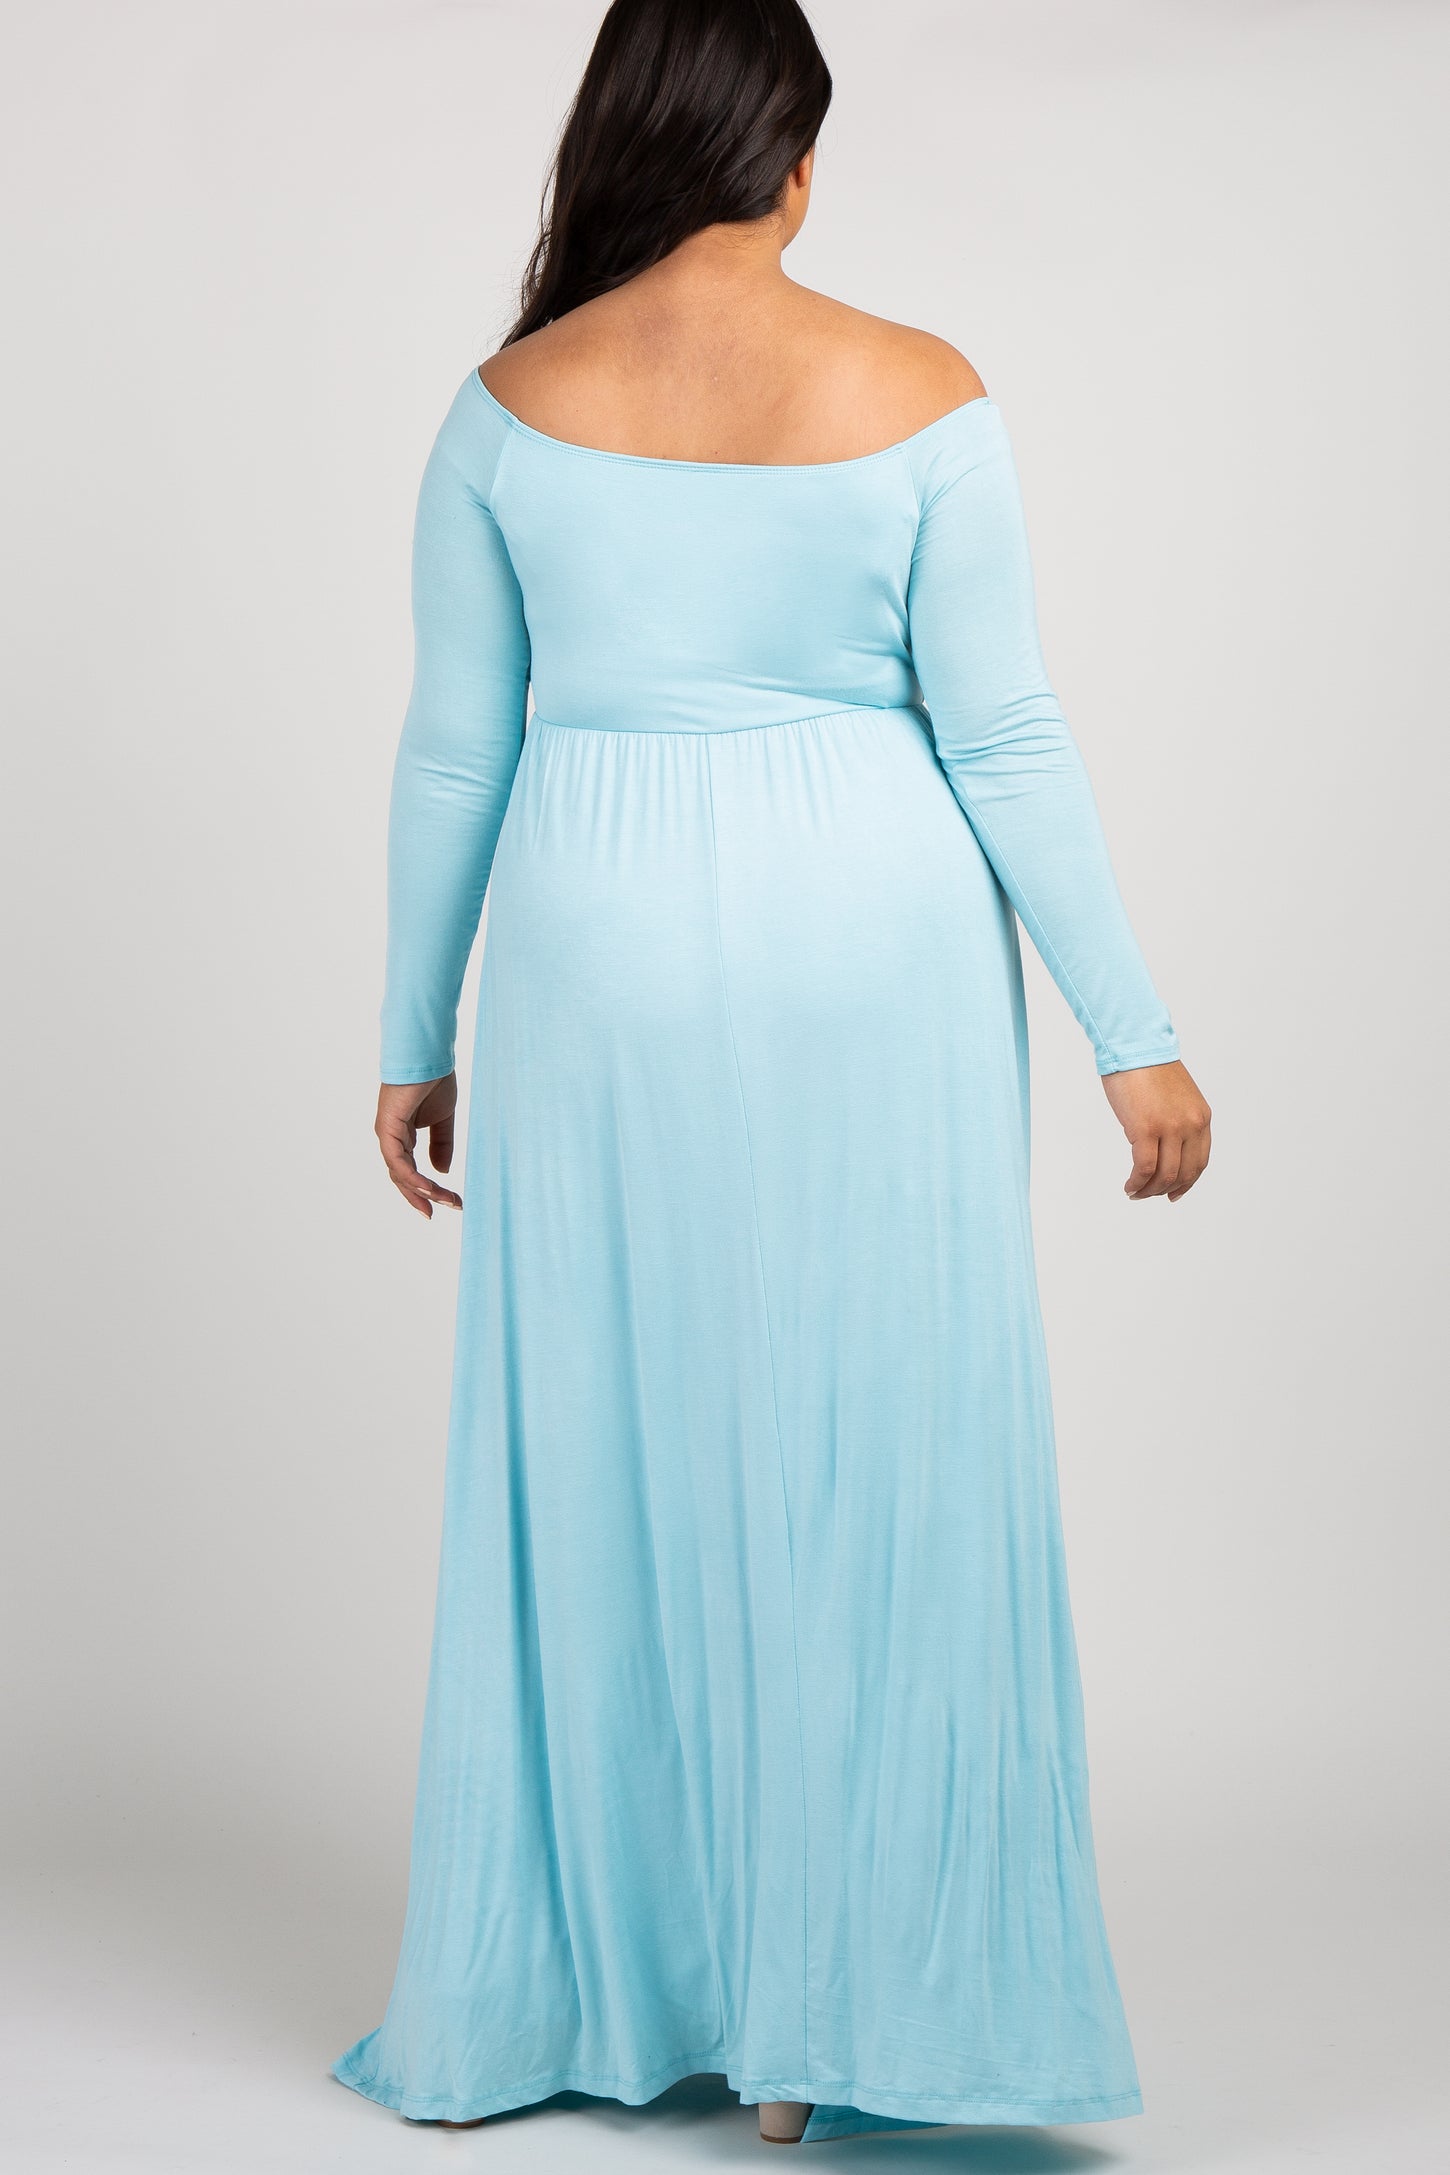 PinkBlush Light Blue Solid Off Shoulder Plus Maxi Dress